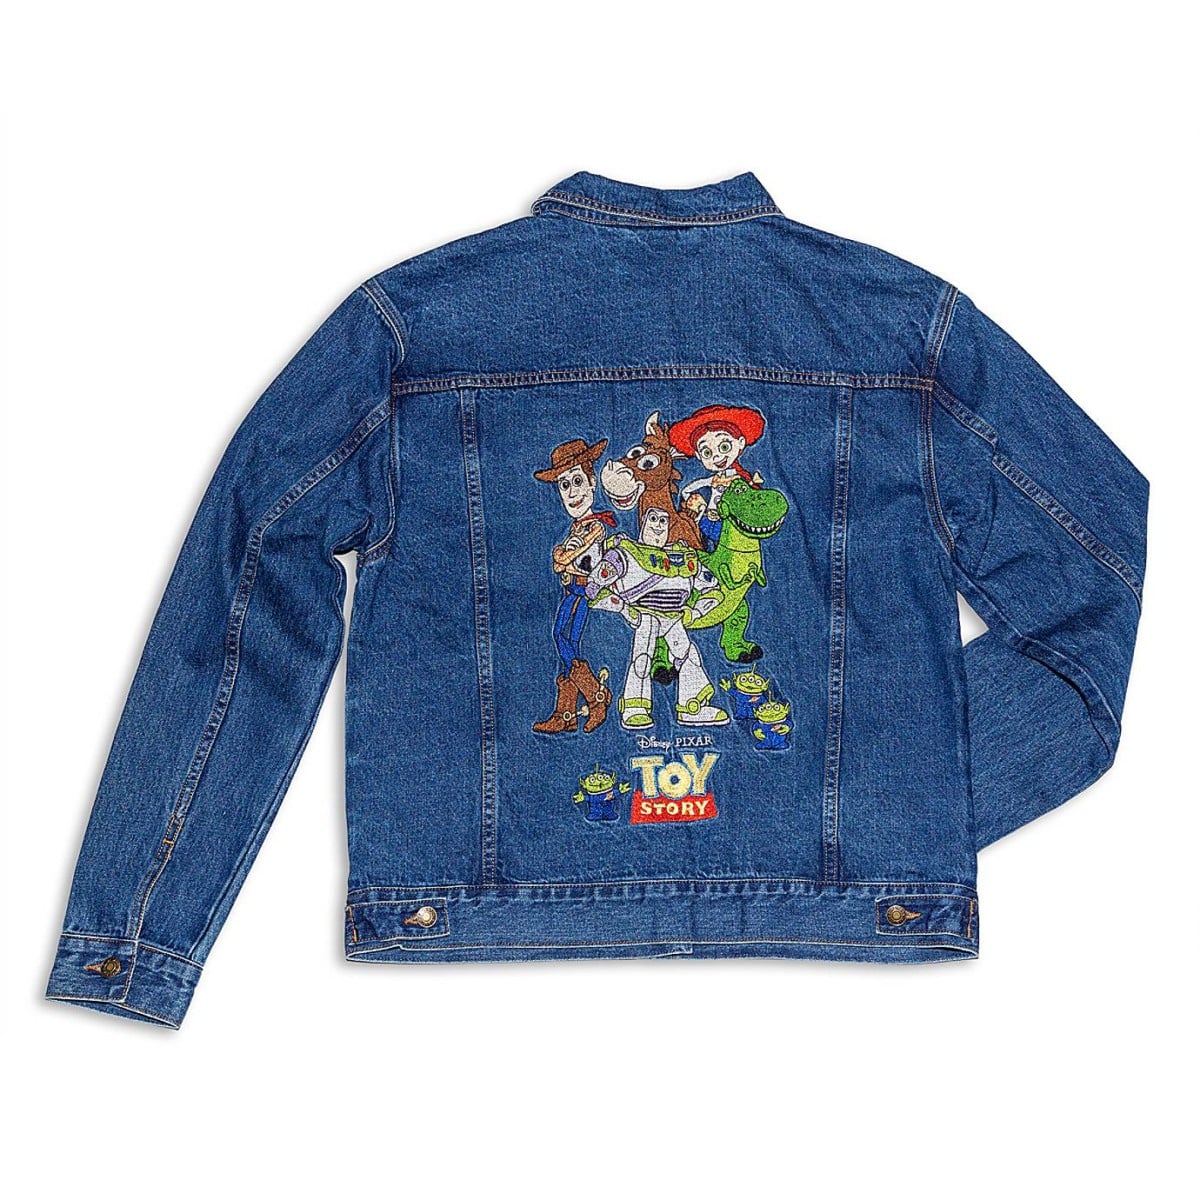 Toy Story Jacket